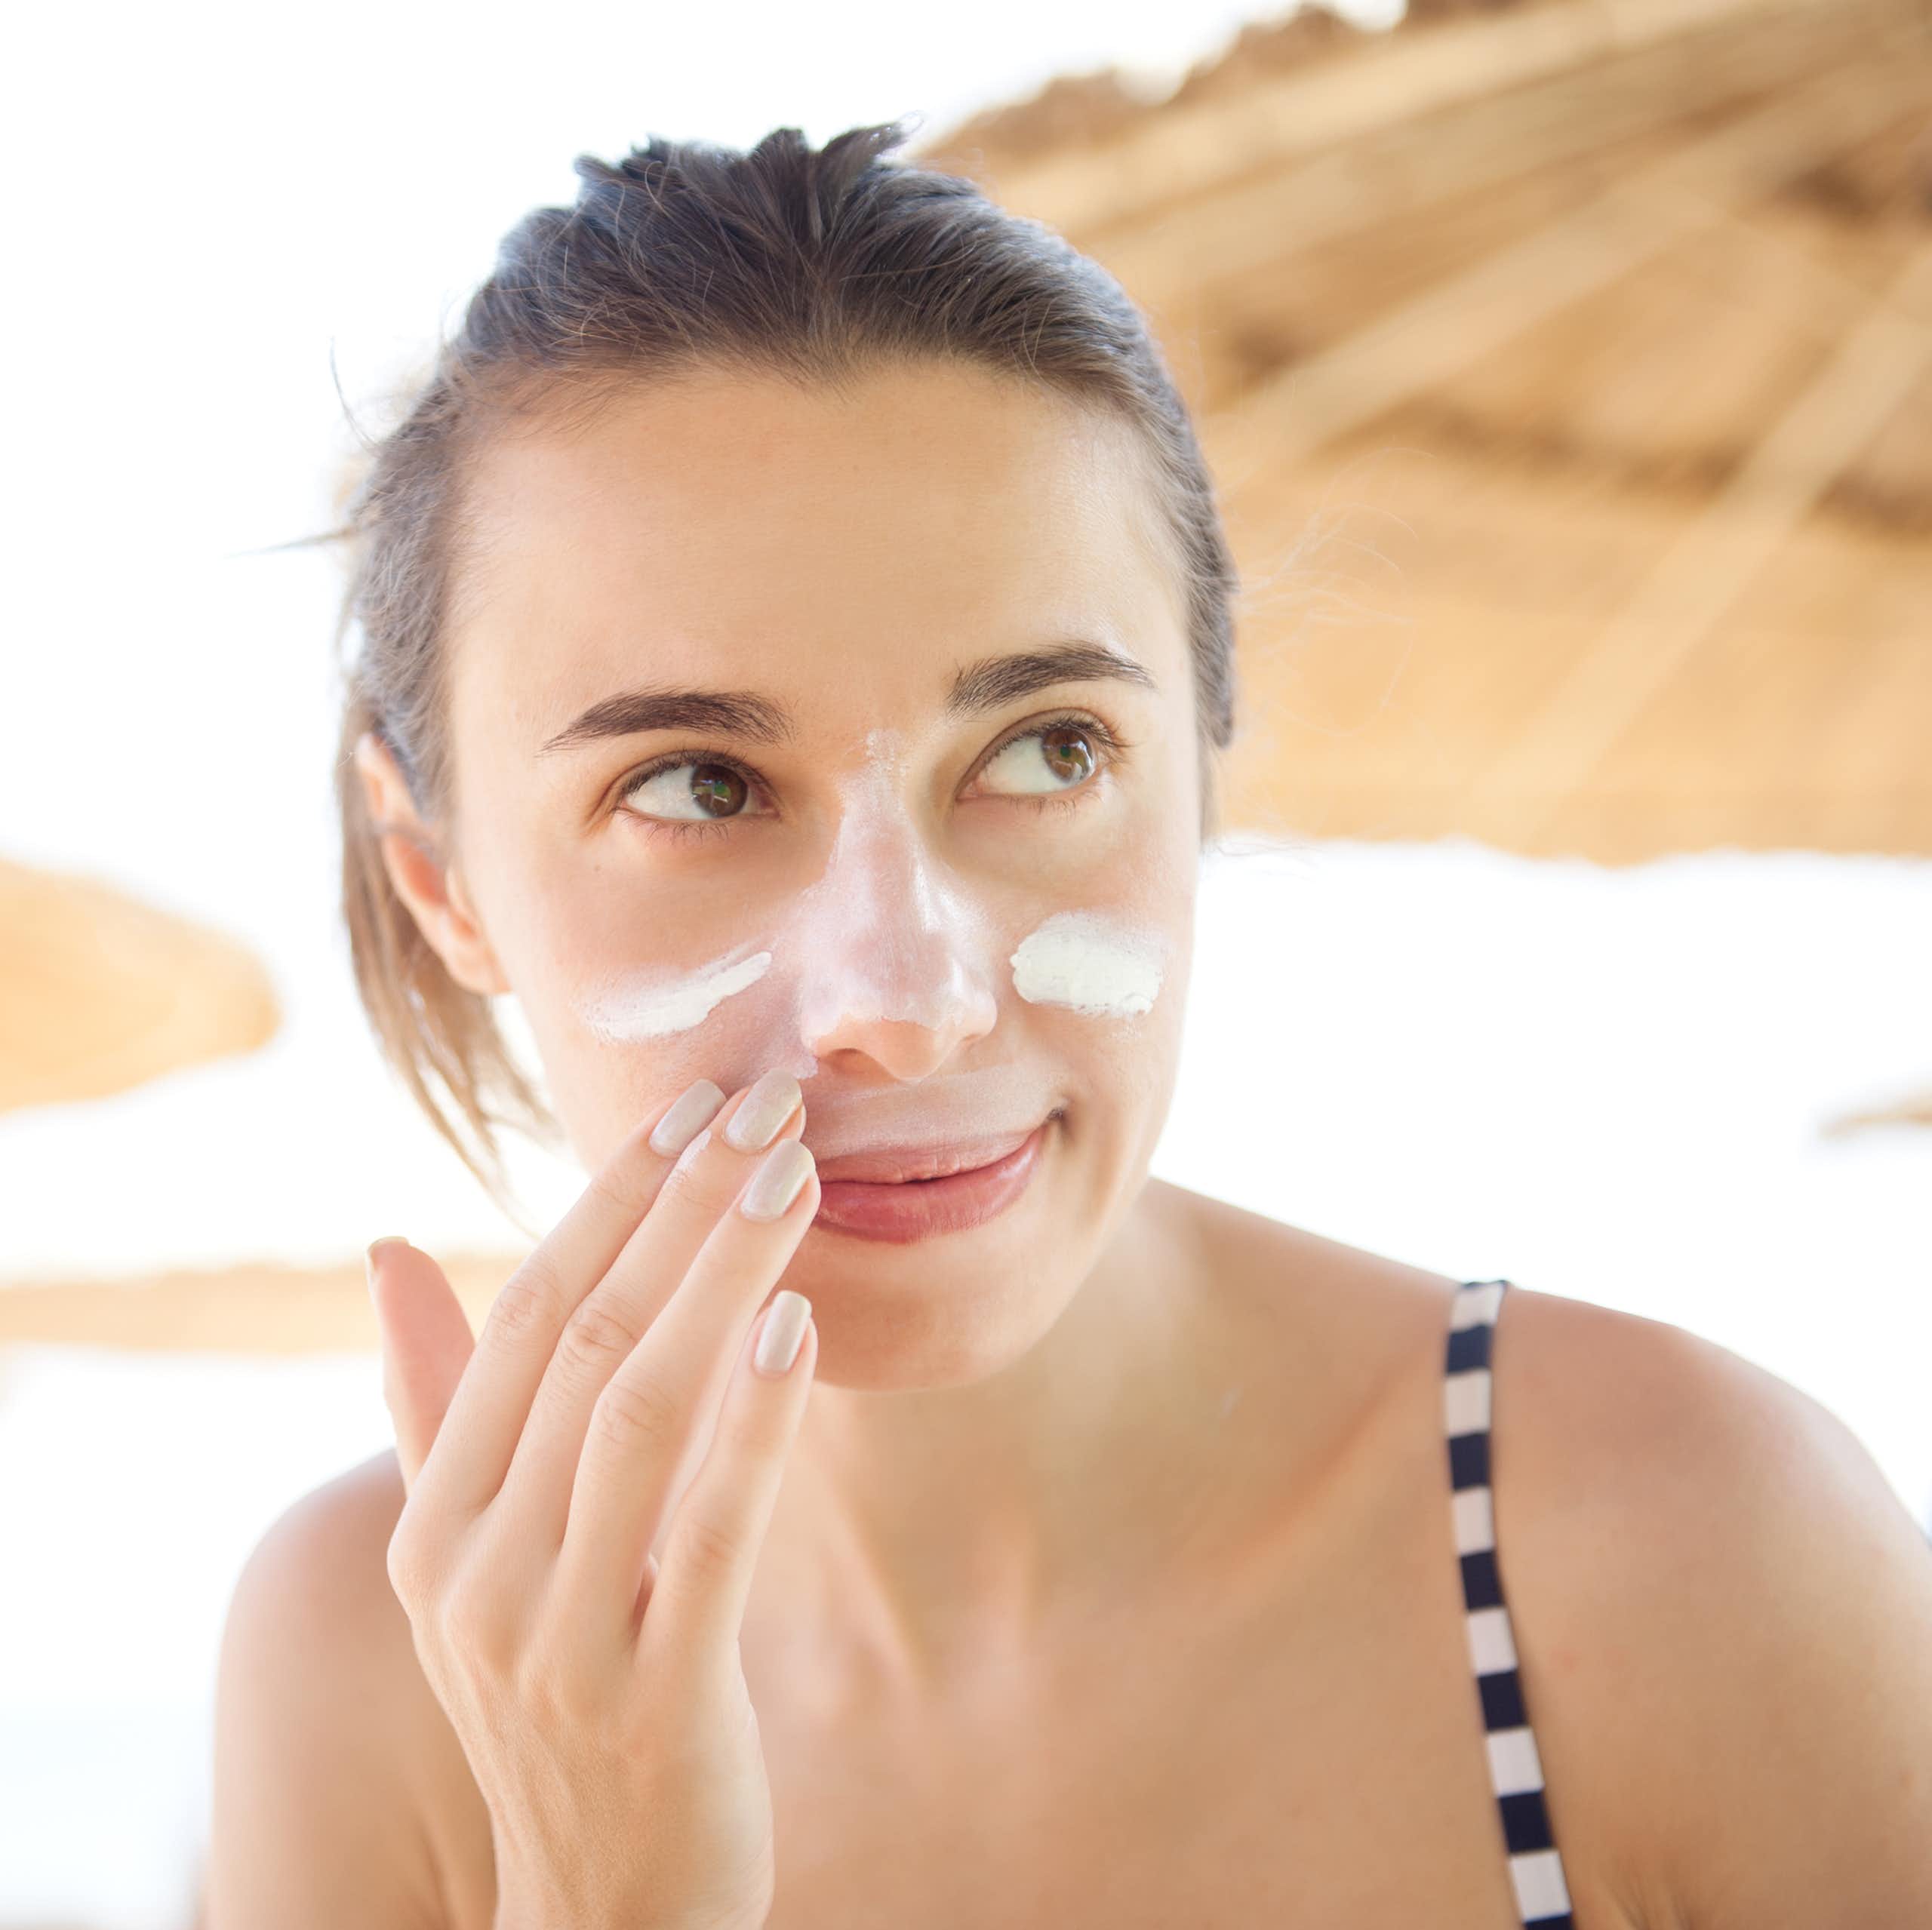 A woman applies sunscreen to her face.